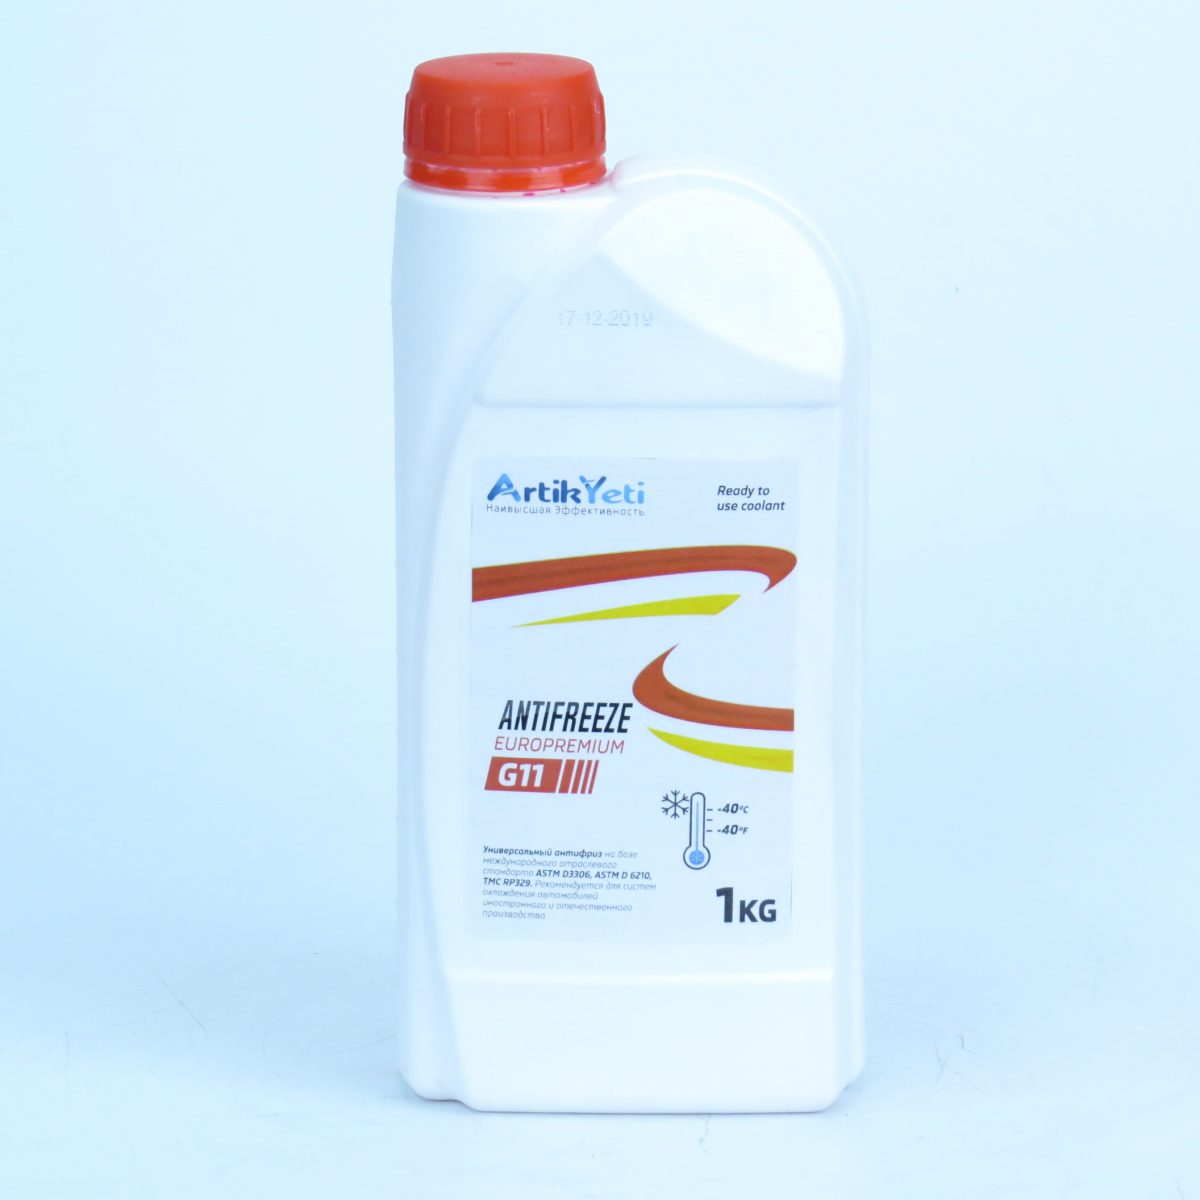 ArtikYeti Antifreeze Euro Premium G11 1кг красный, цена